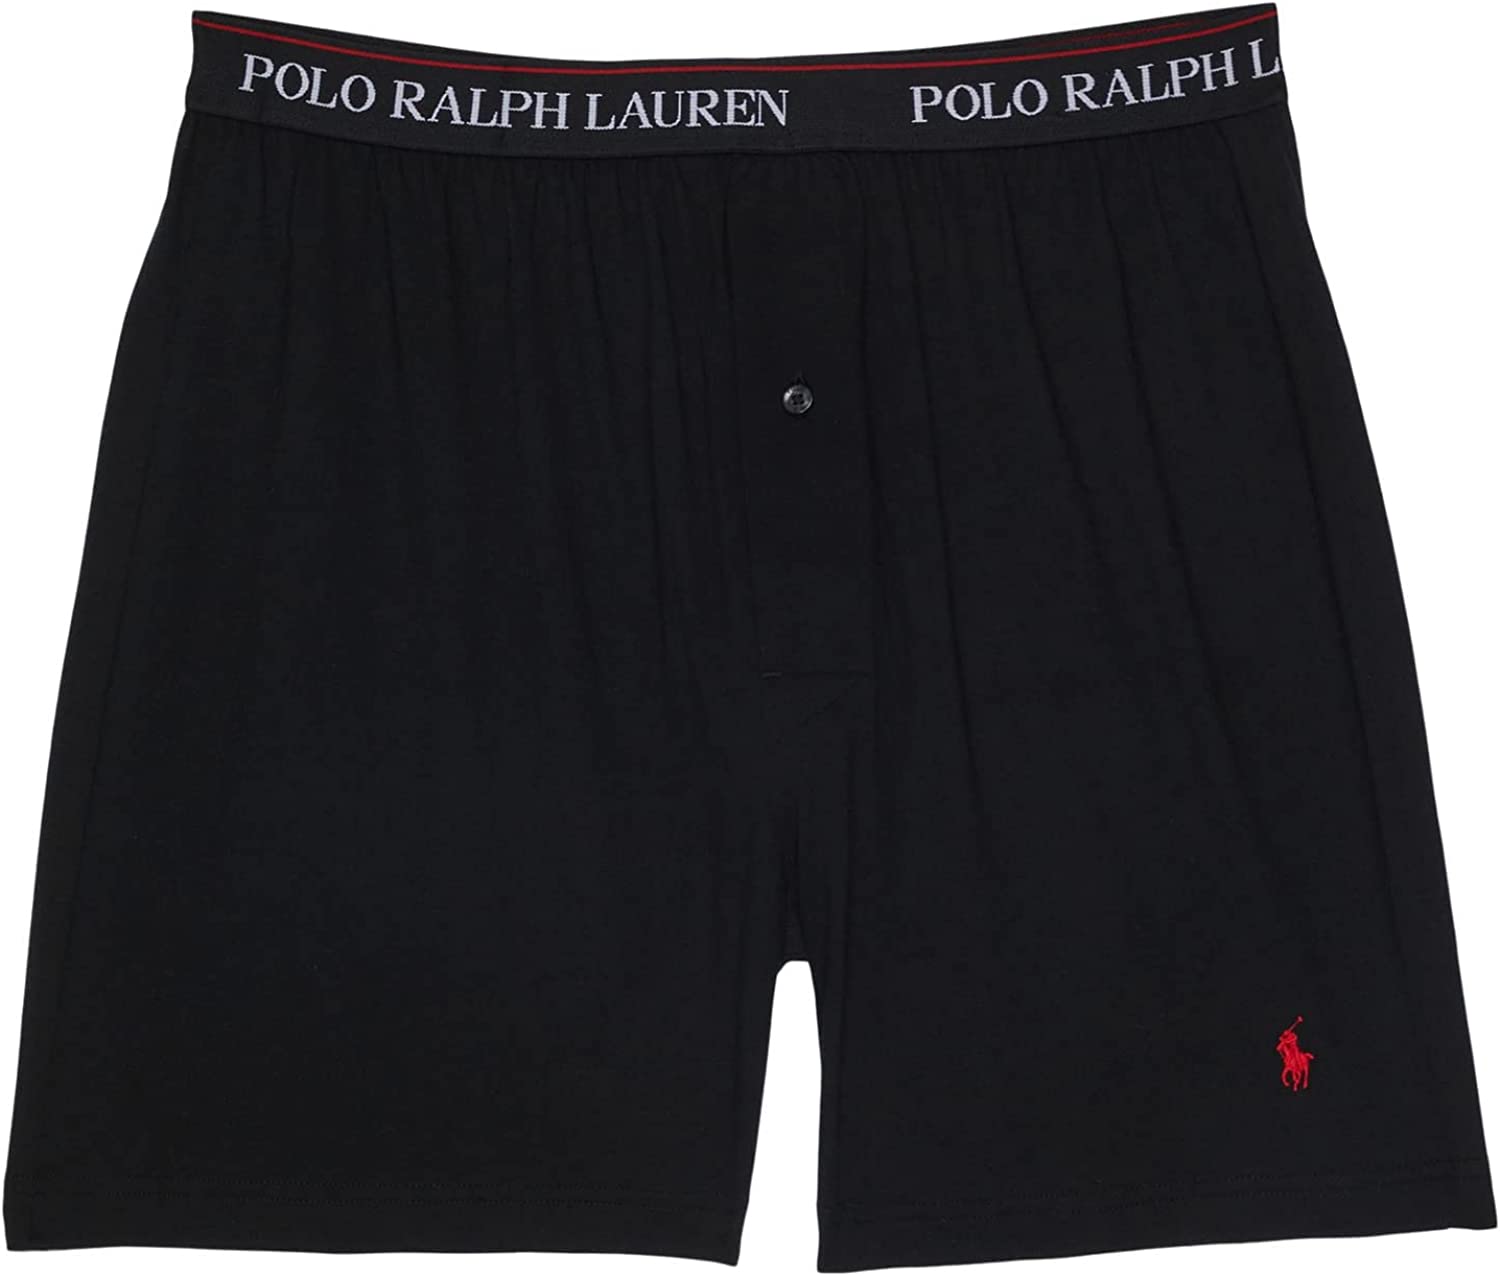 Polo Ralph Lauren Underwear Men's 5 Pack Classic Fit Boxer Briefs | eBay